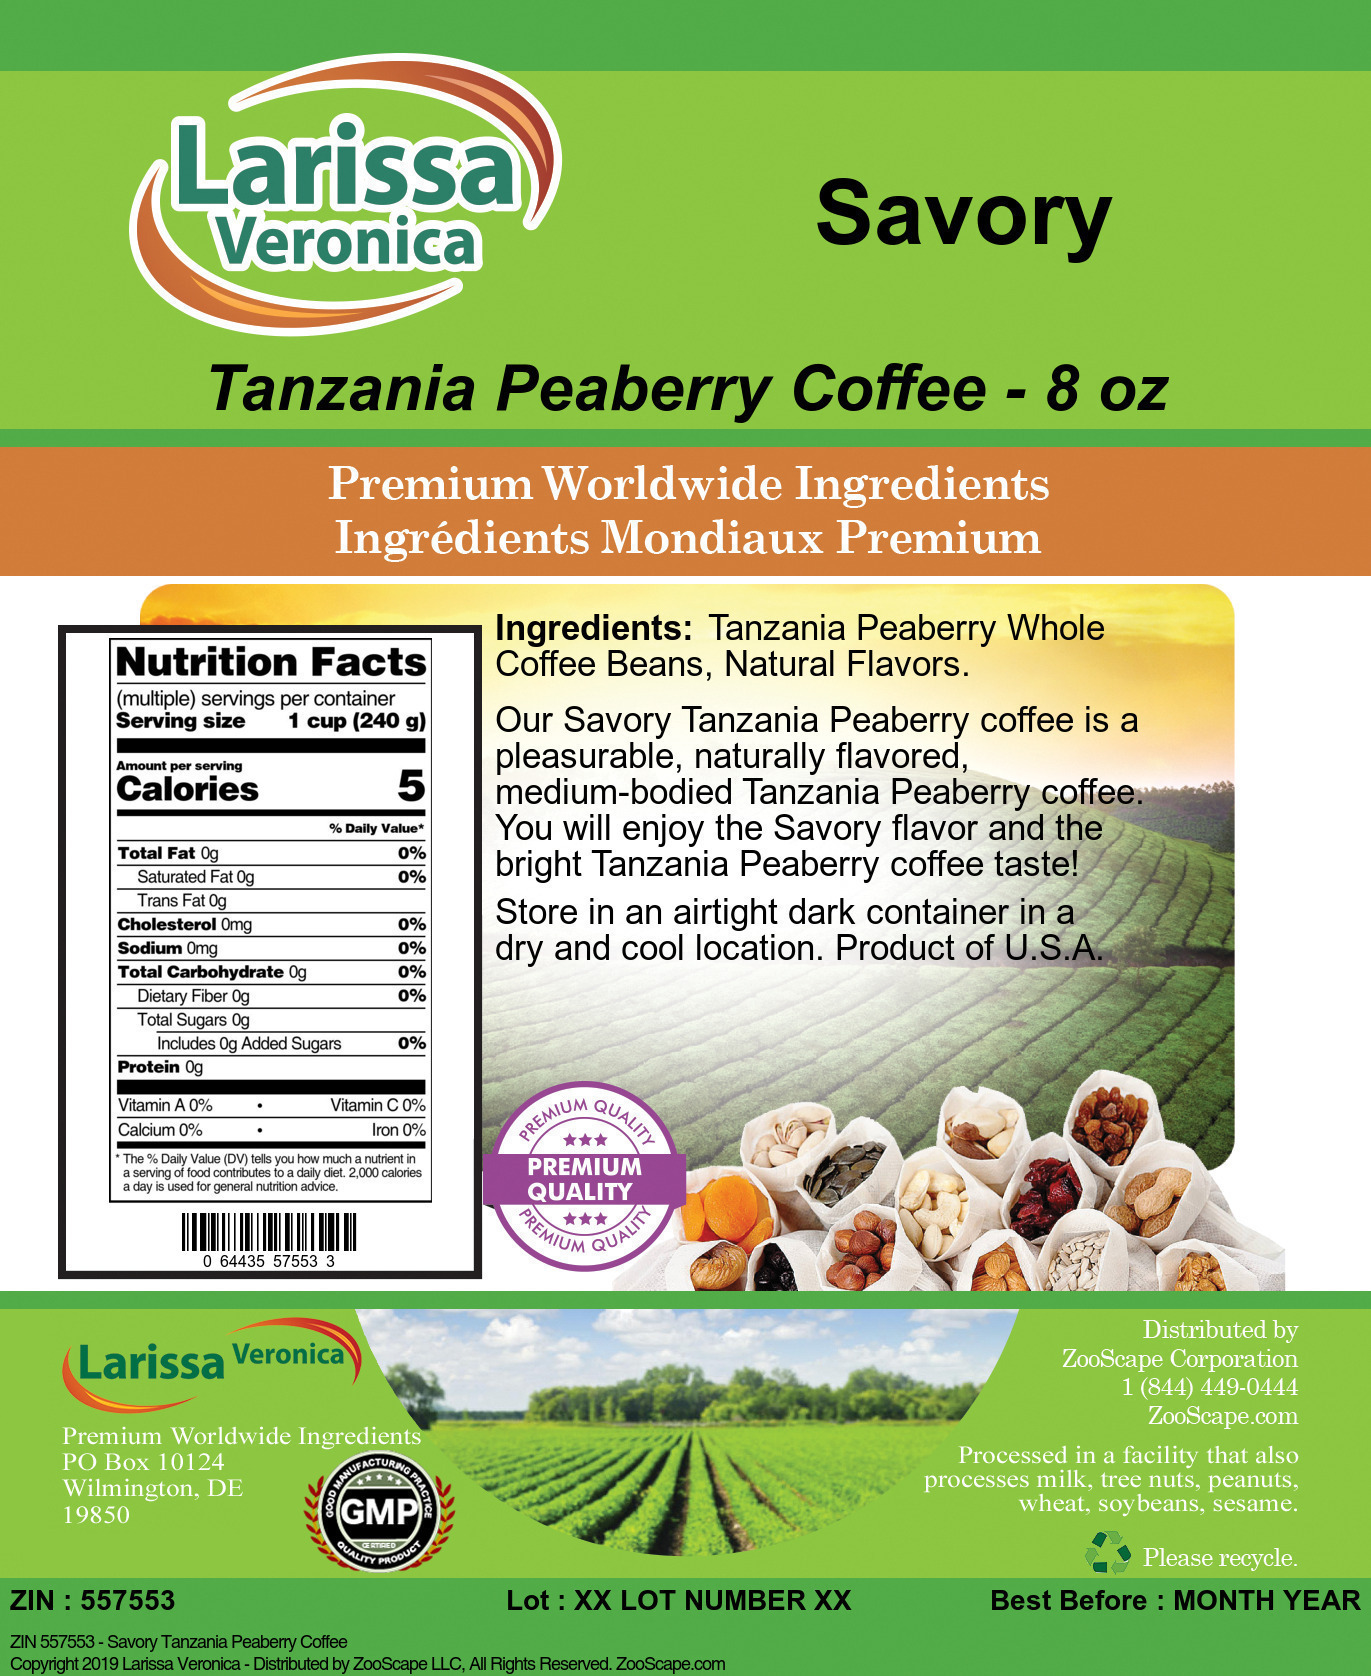 Savory Tanzania Peaberry Coffee - Label